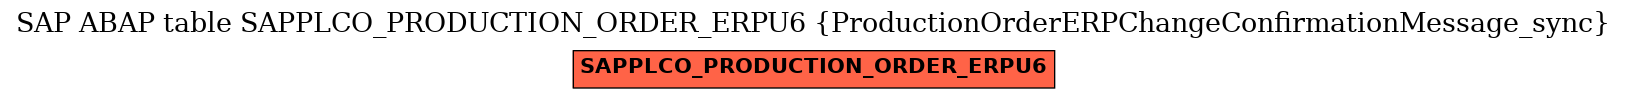 E-R Diagram for table SAPPLCO_PRODUCTION_ORDER_ERPU6 (ProductionOrderERPChangeConfirmationMessage_sync)